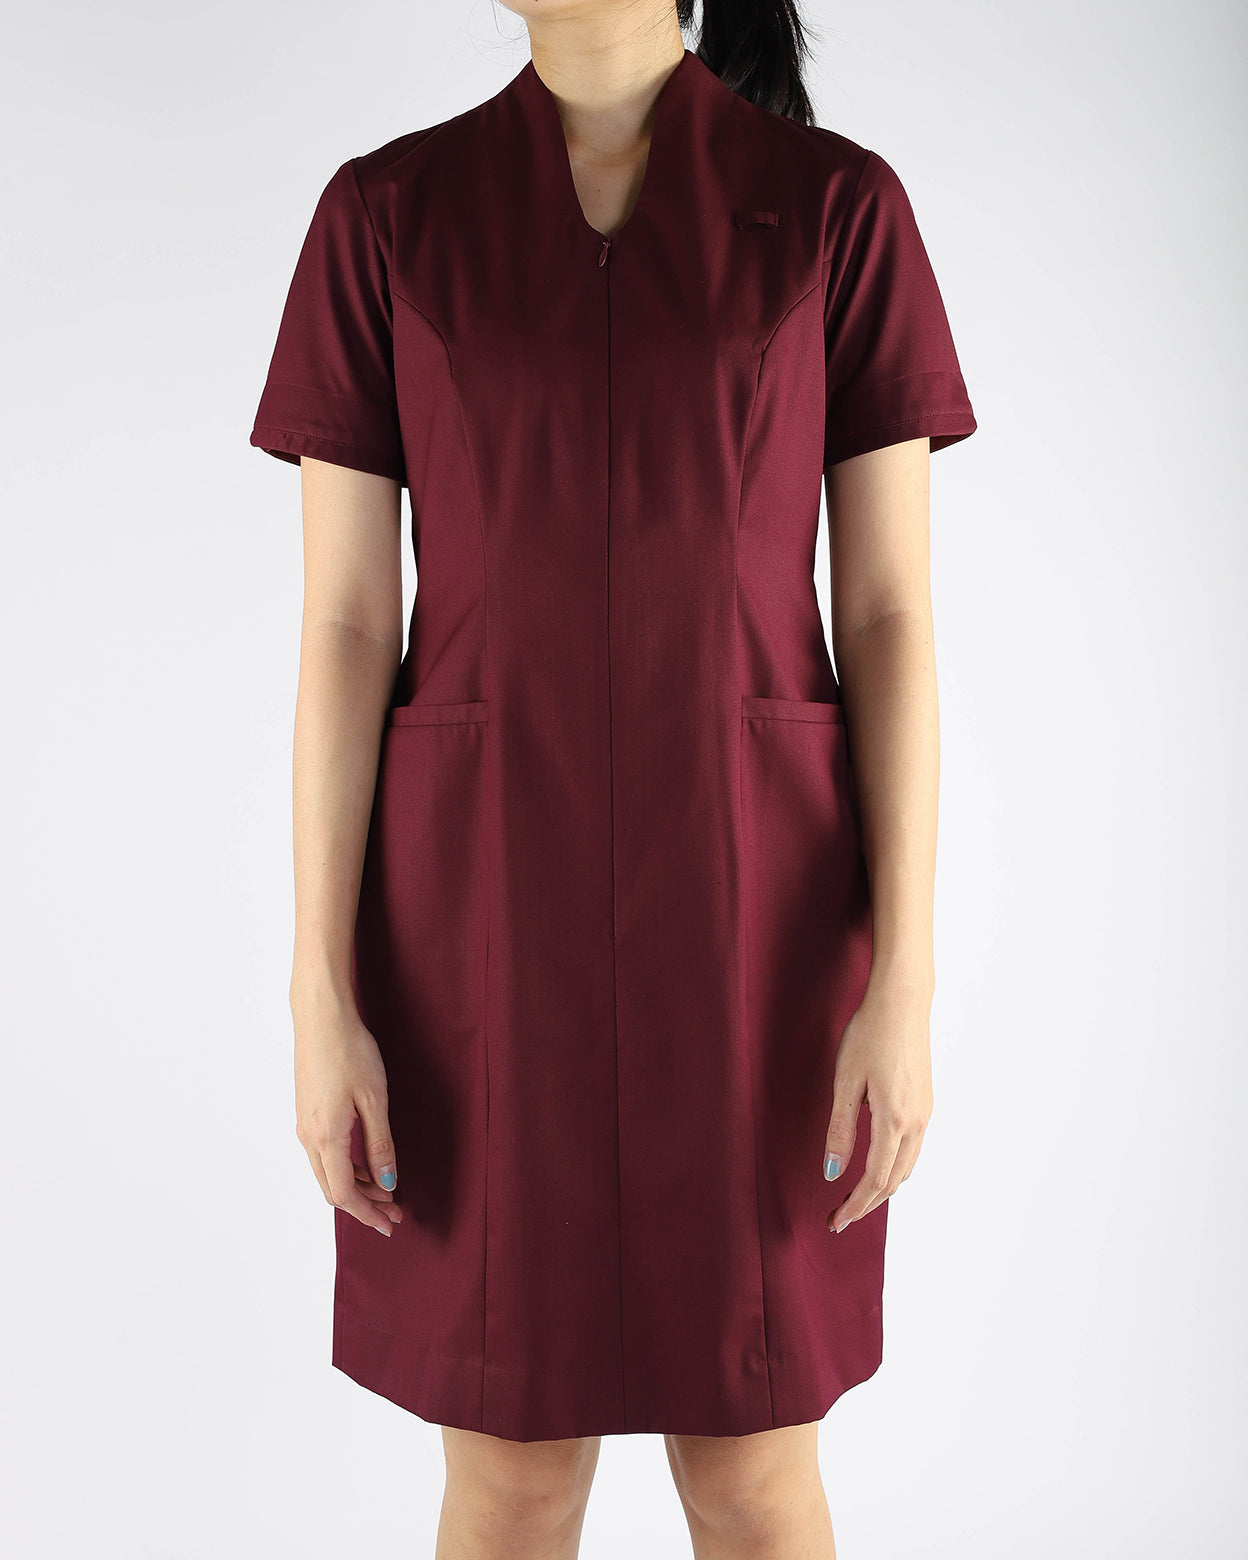 Red Staff Nurse Dress